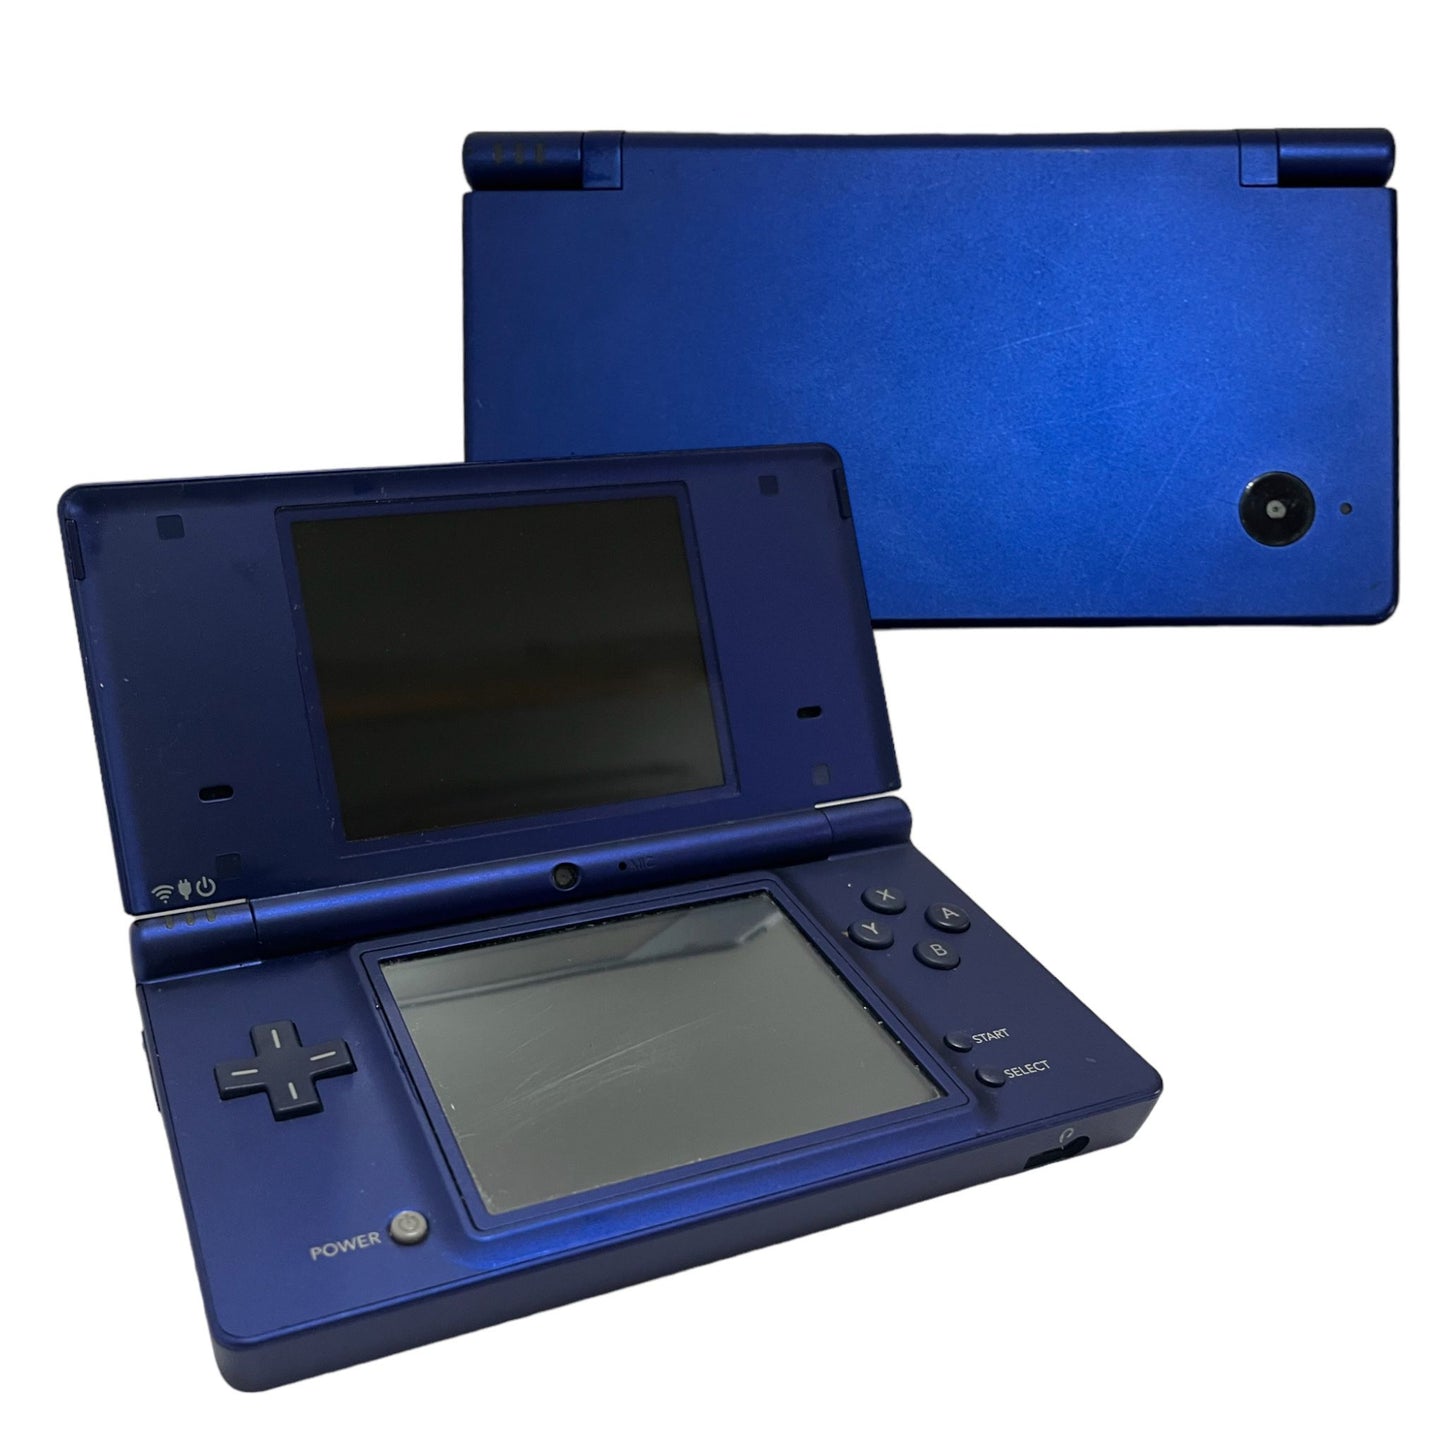 Nintendo DSI Dark Blue